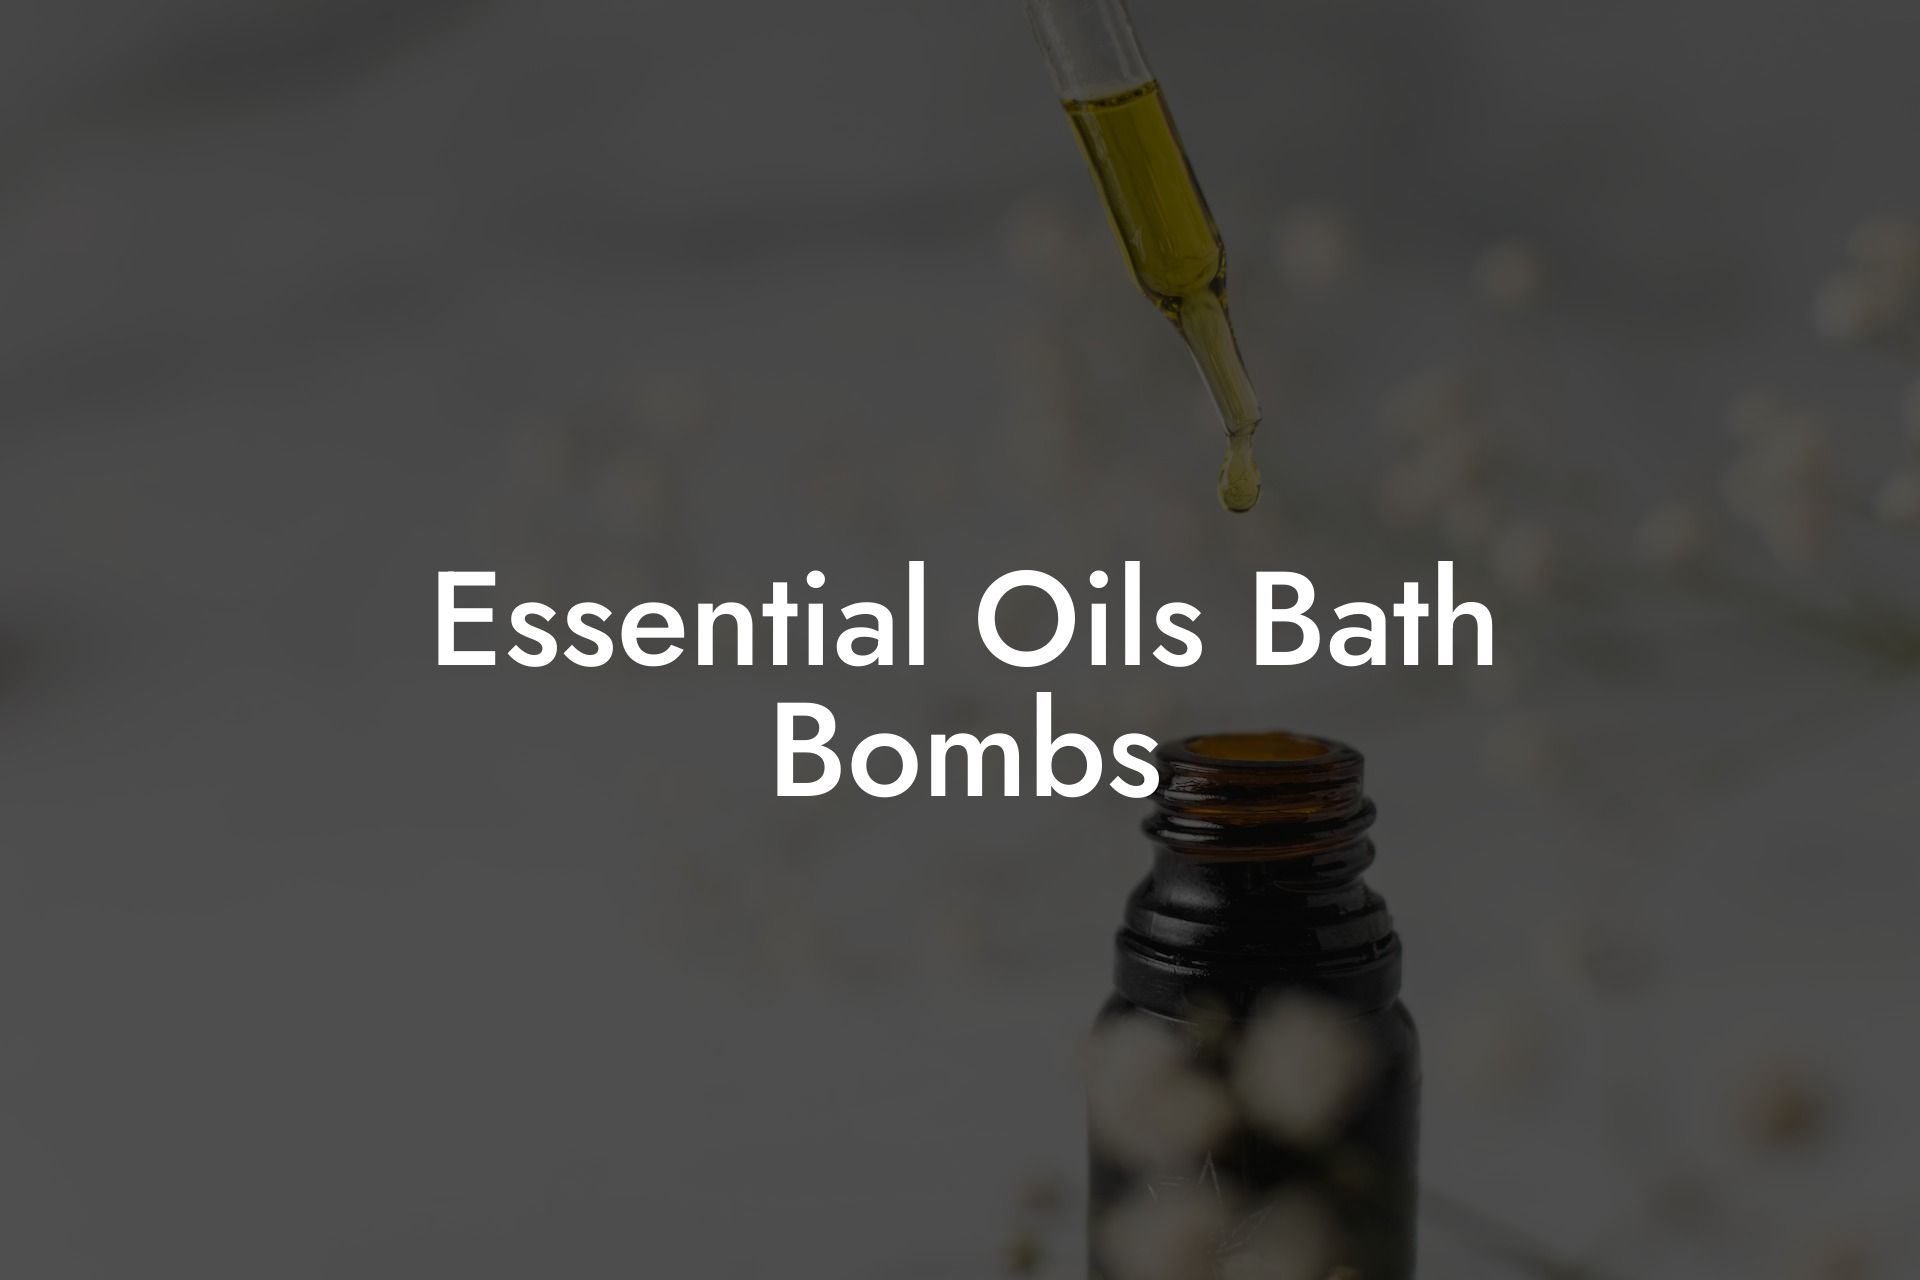 Essential Oils Bath Bombs